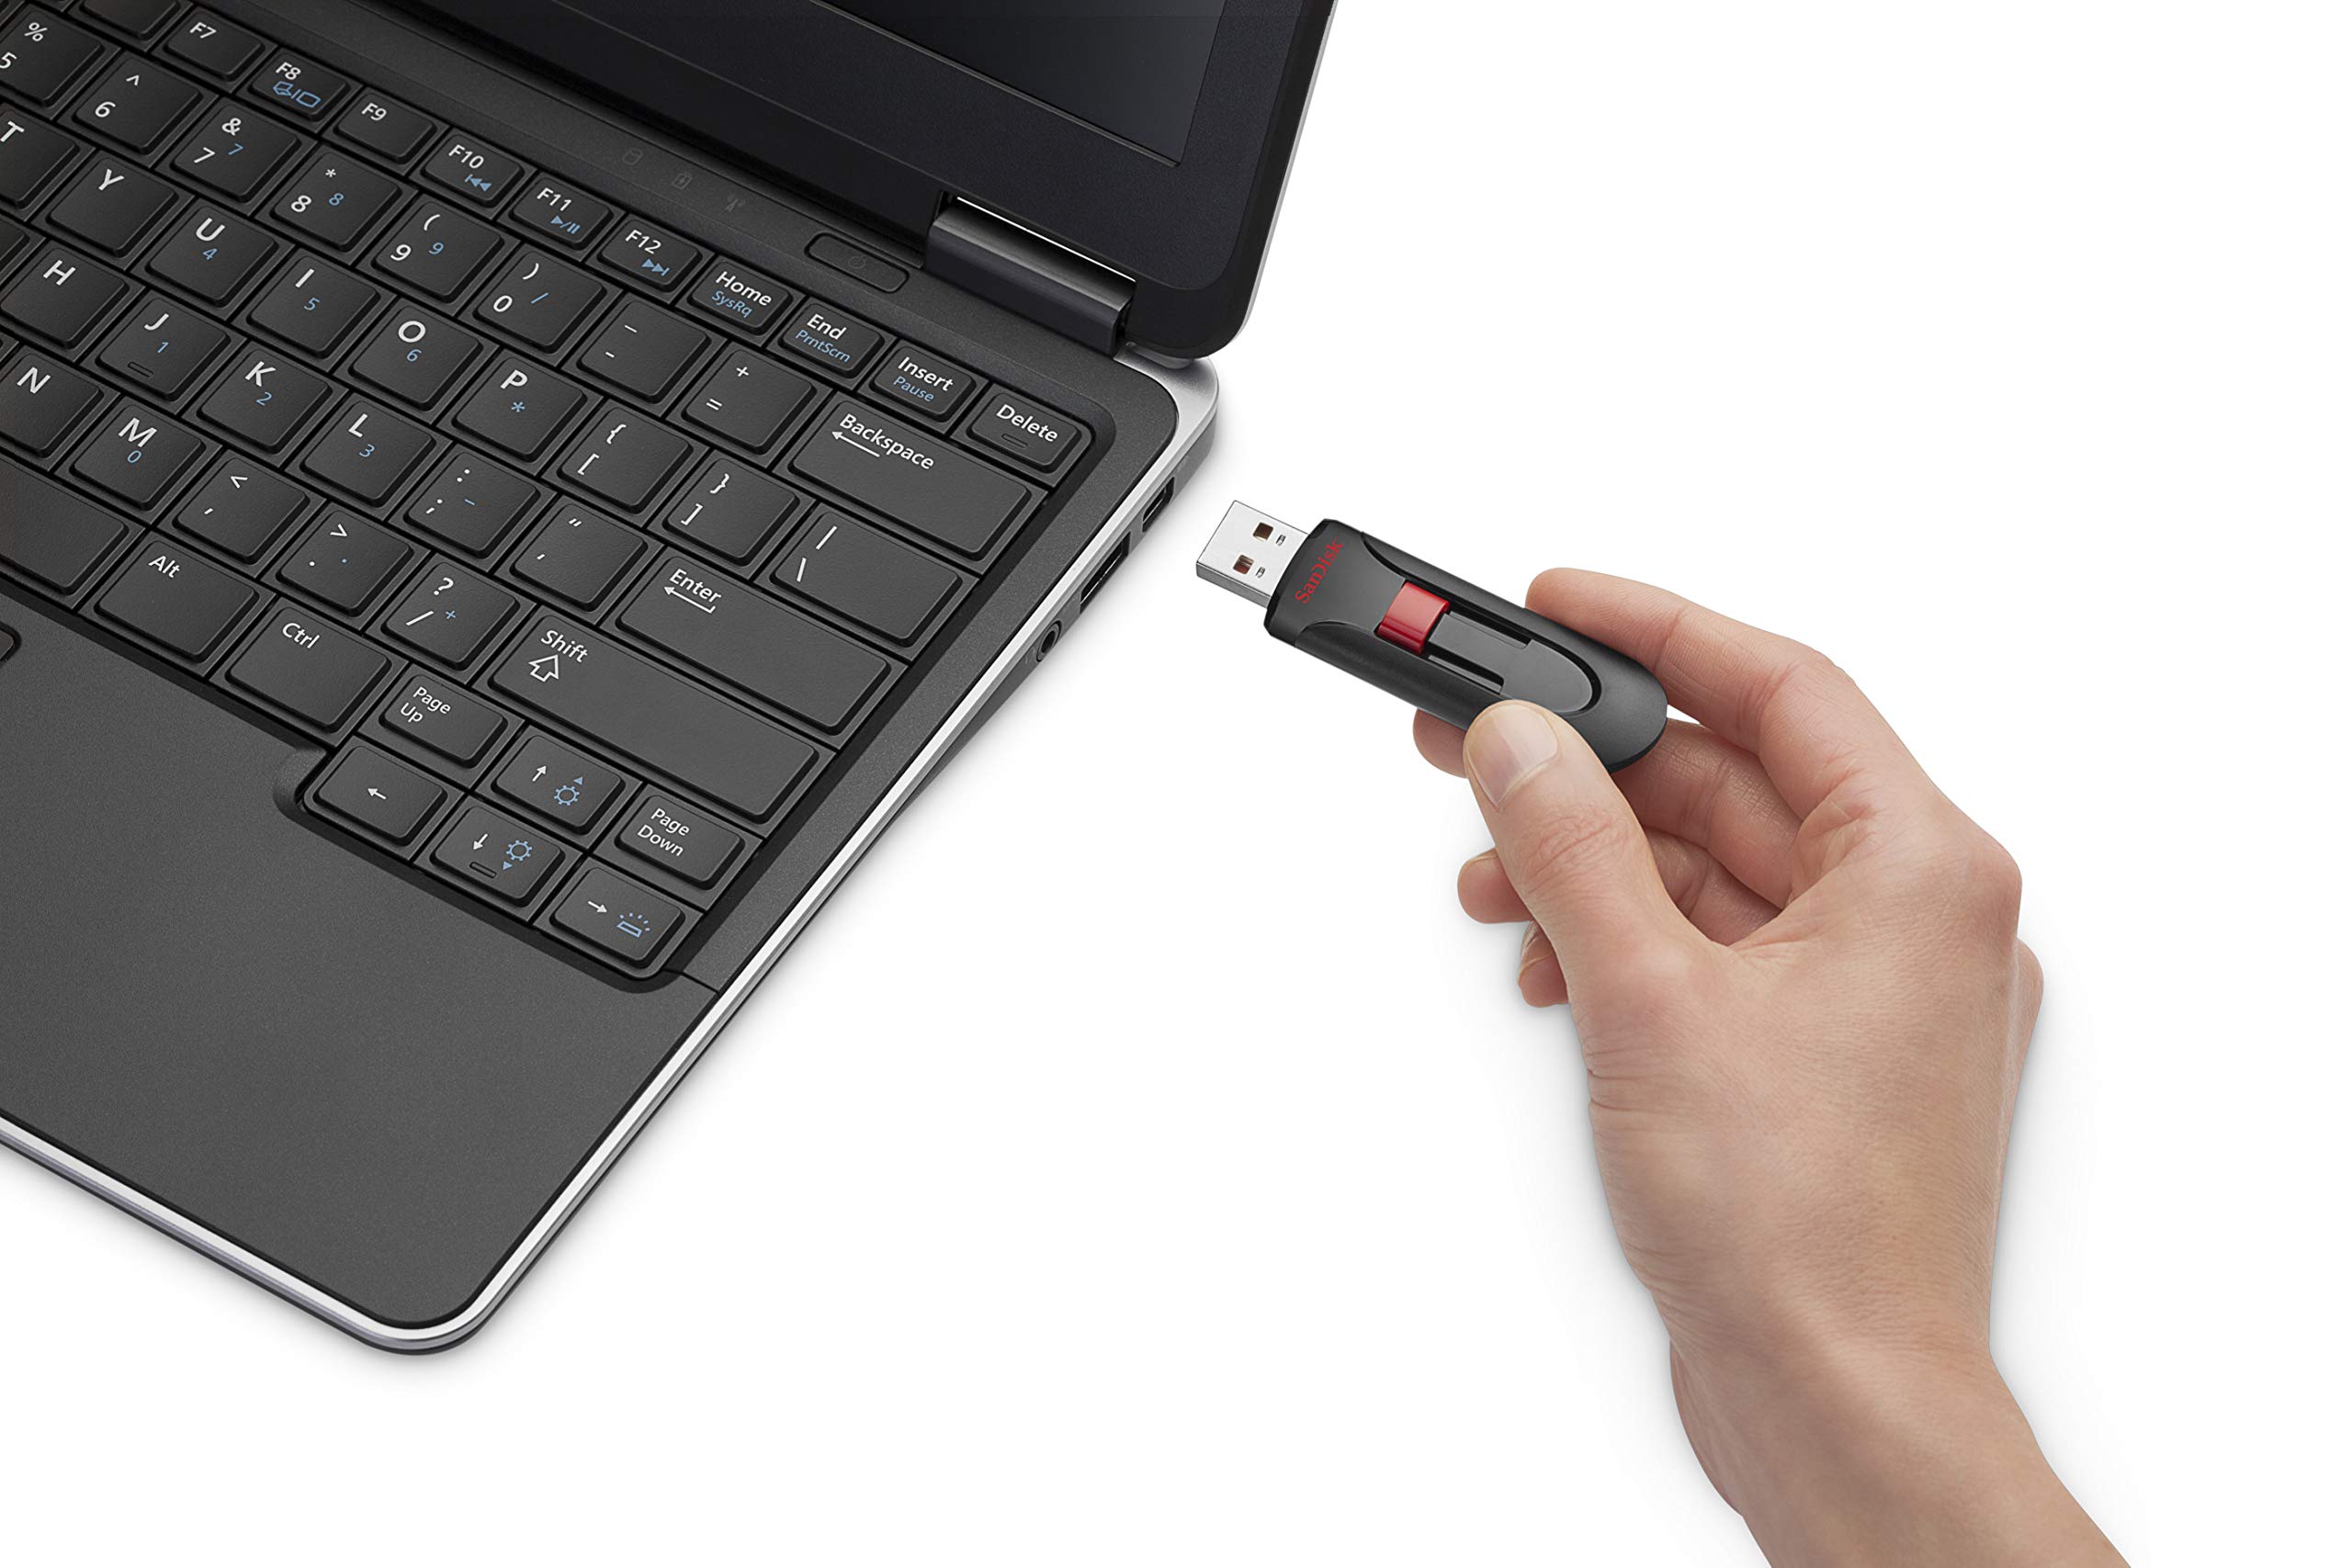 SanDisk 32GB Cruzer Glide USB 2.0 Flash Drive - SDCZ60-032G-B35, Red